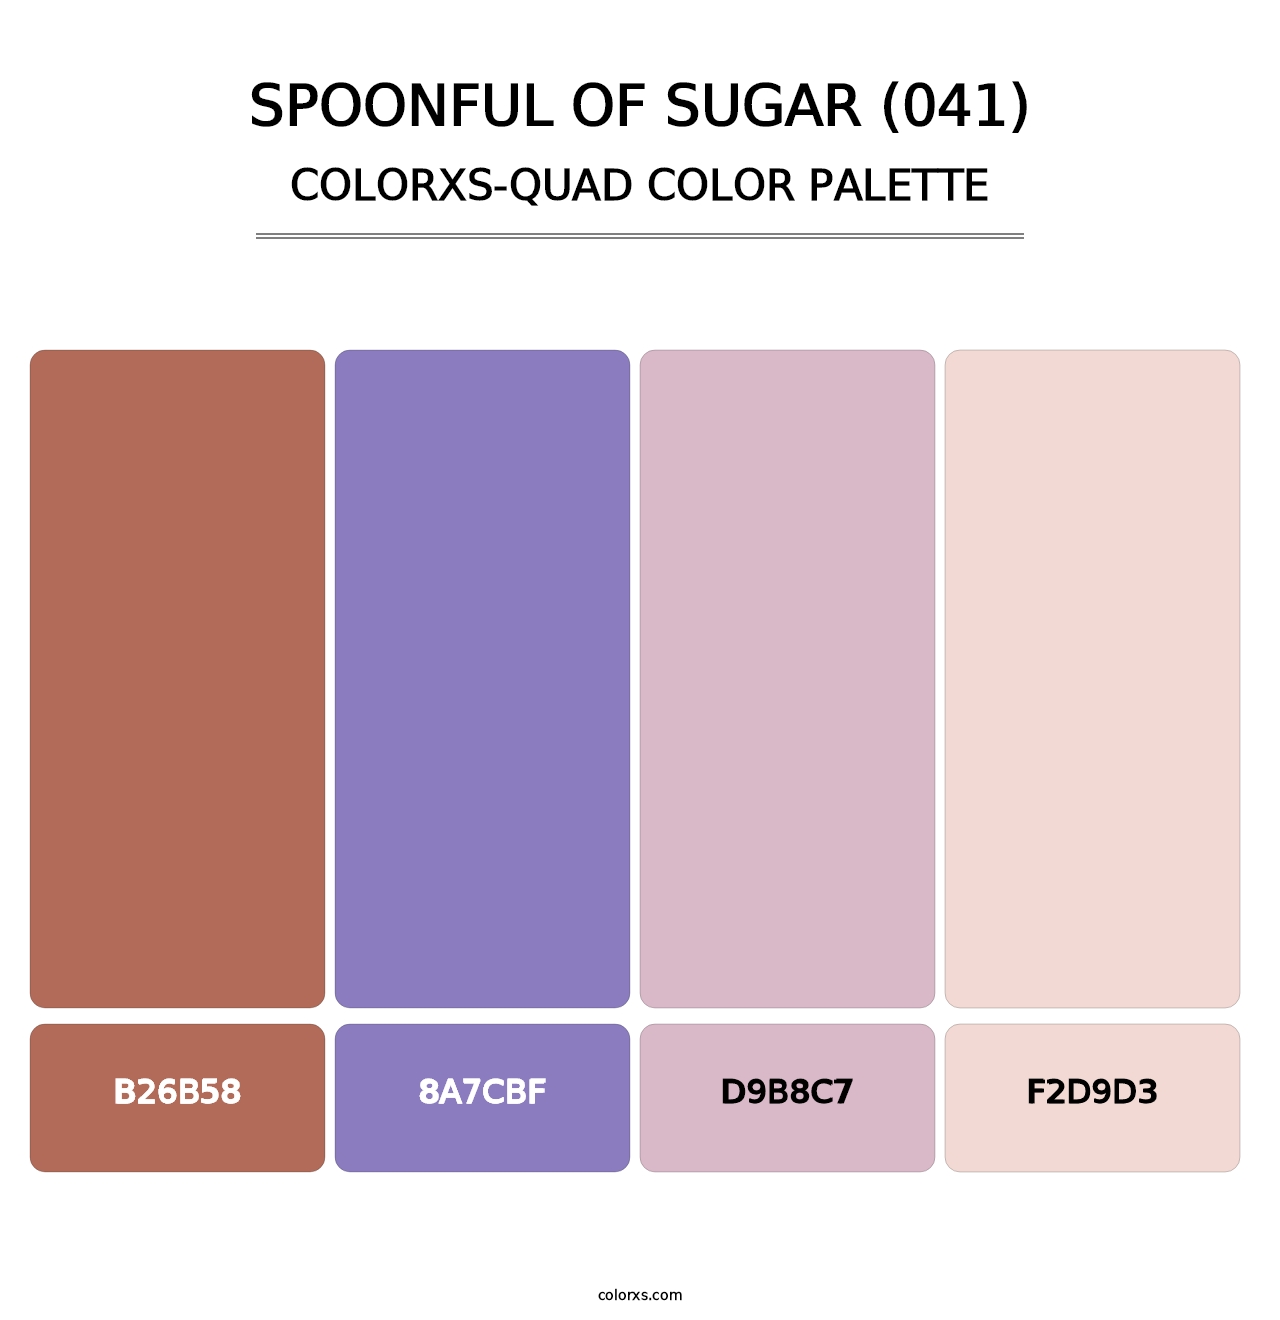 Spoonful of Sugar (041) - Colorxs Quad Palette